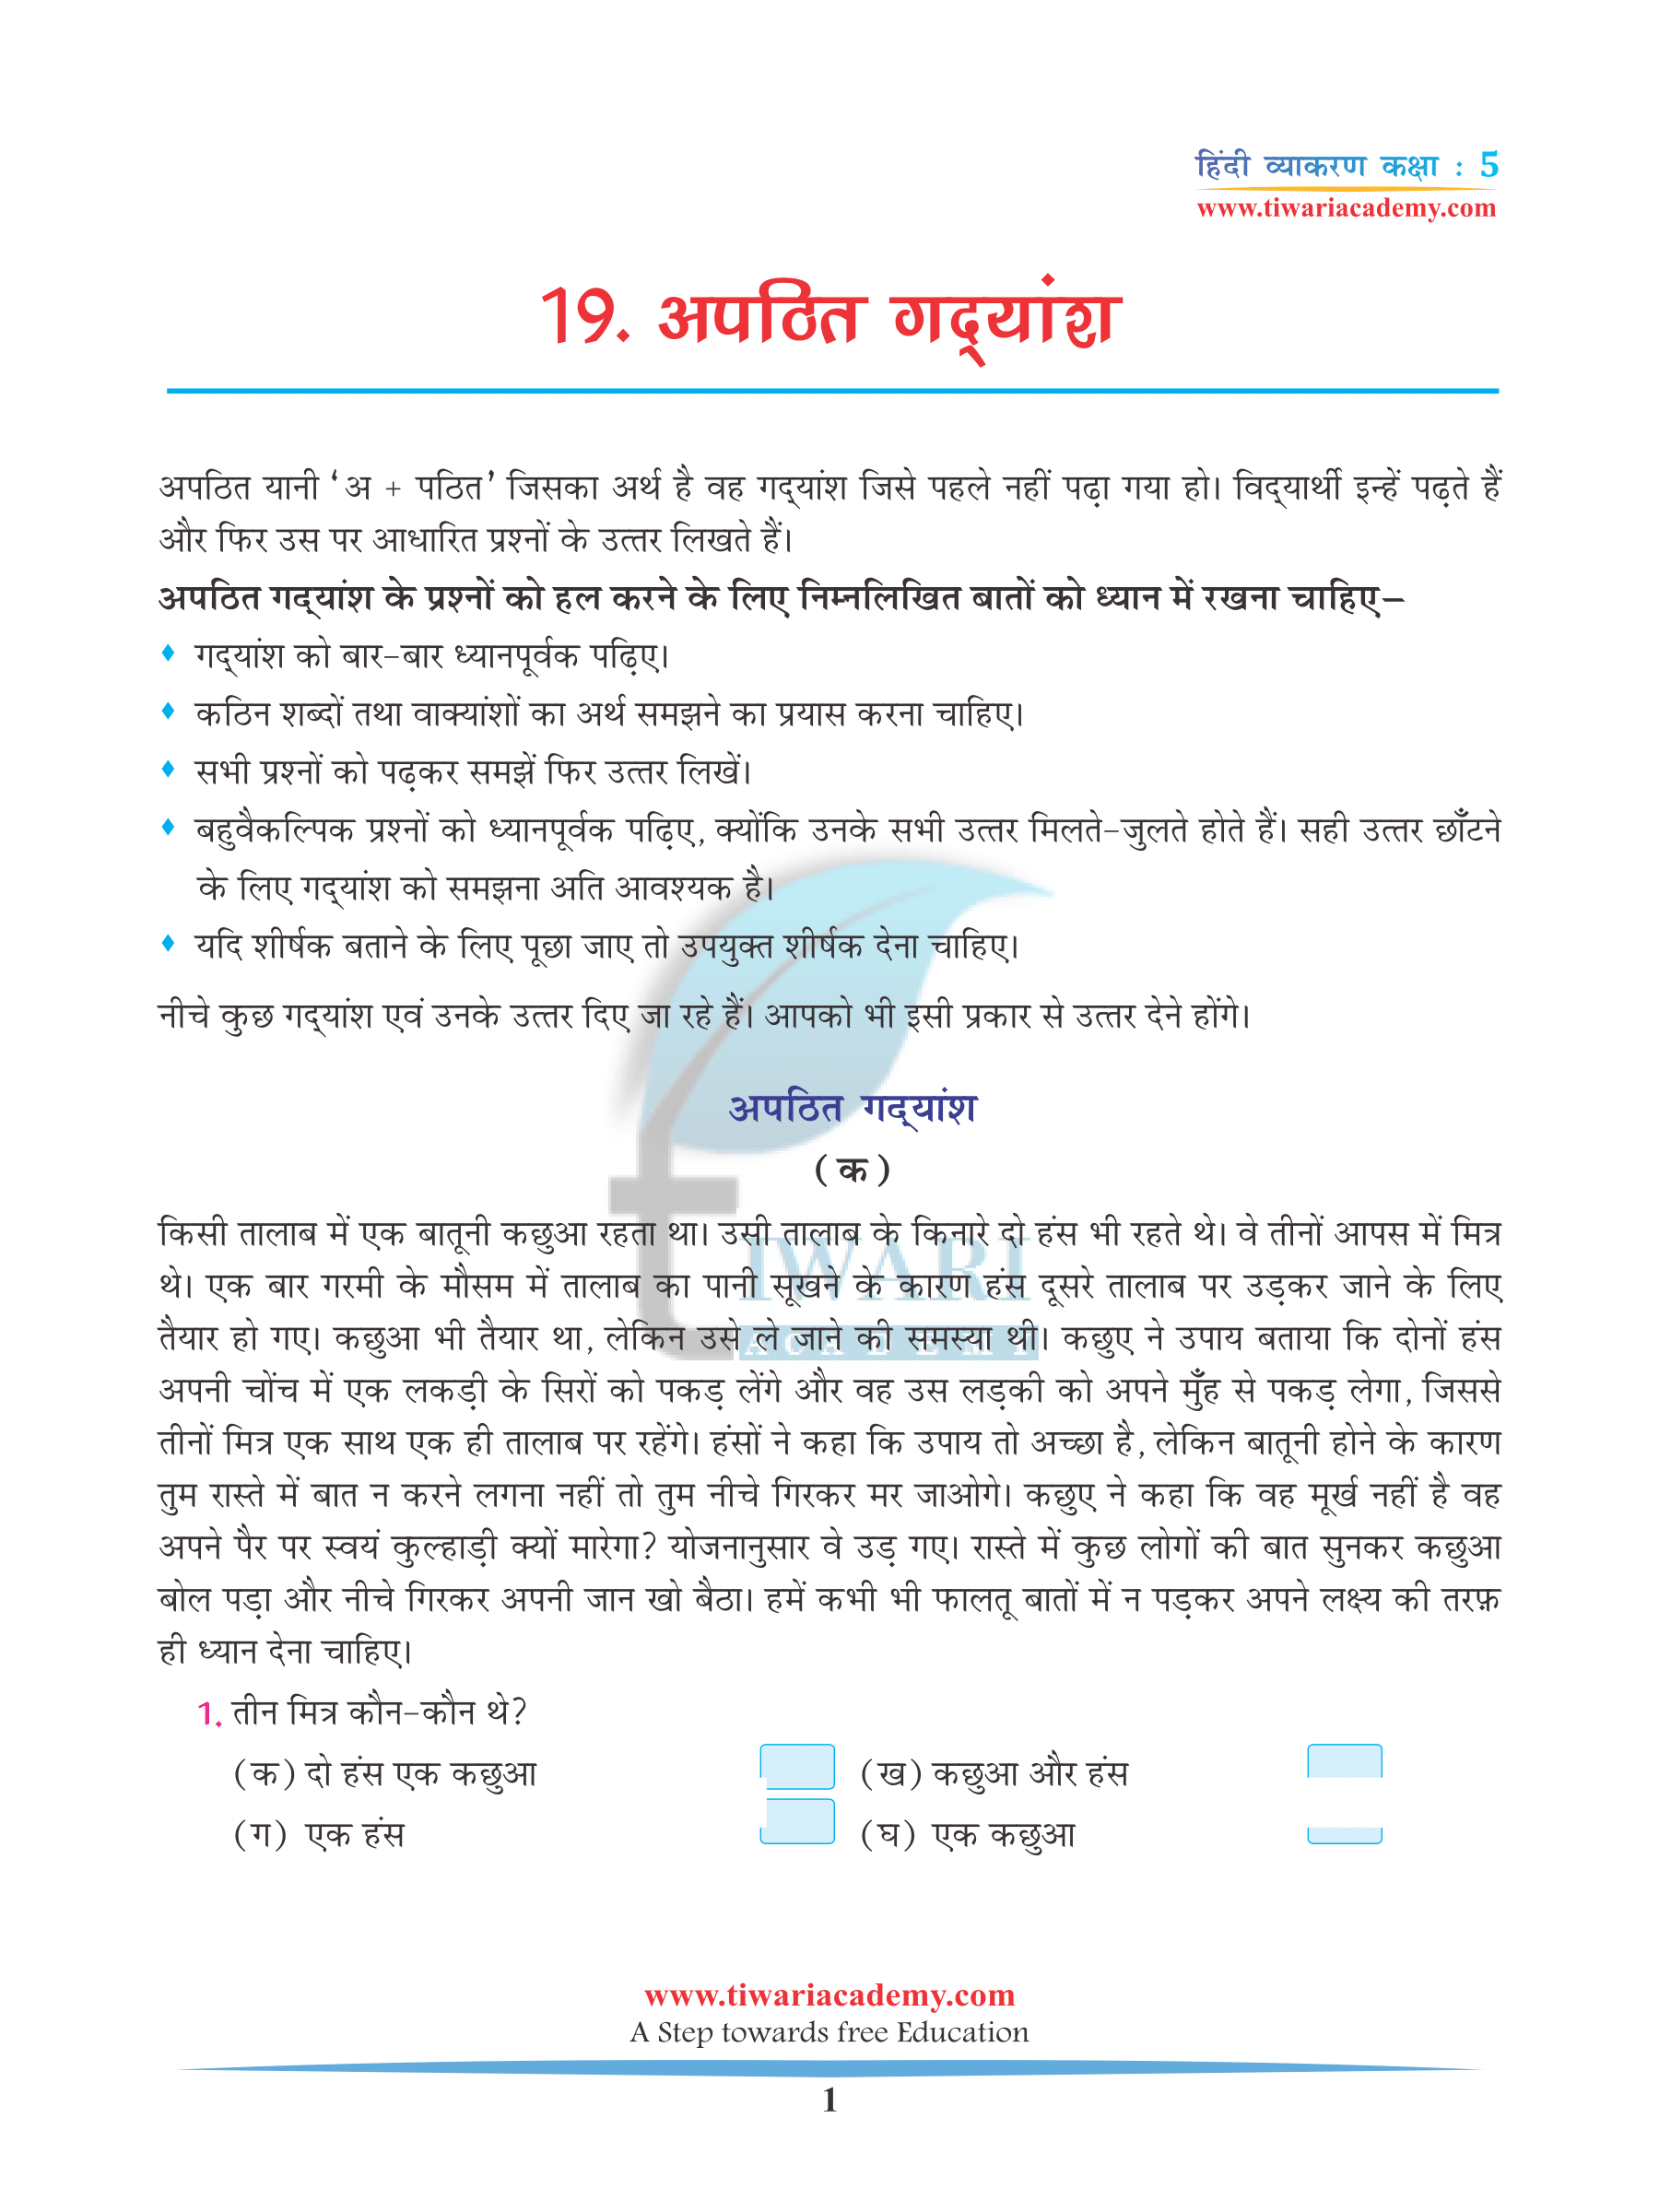 Class 5 Hindi Grammar Chapter 19 Apathit Gadyansh